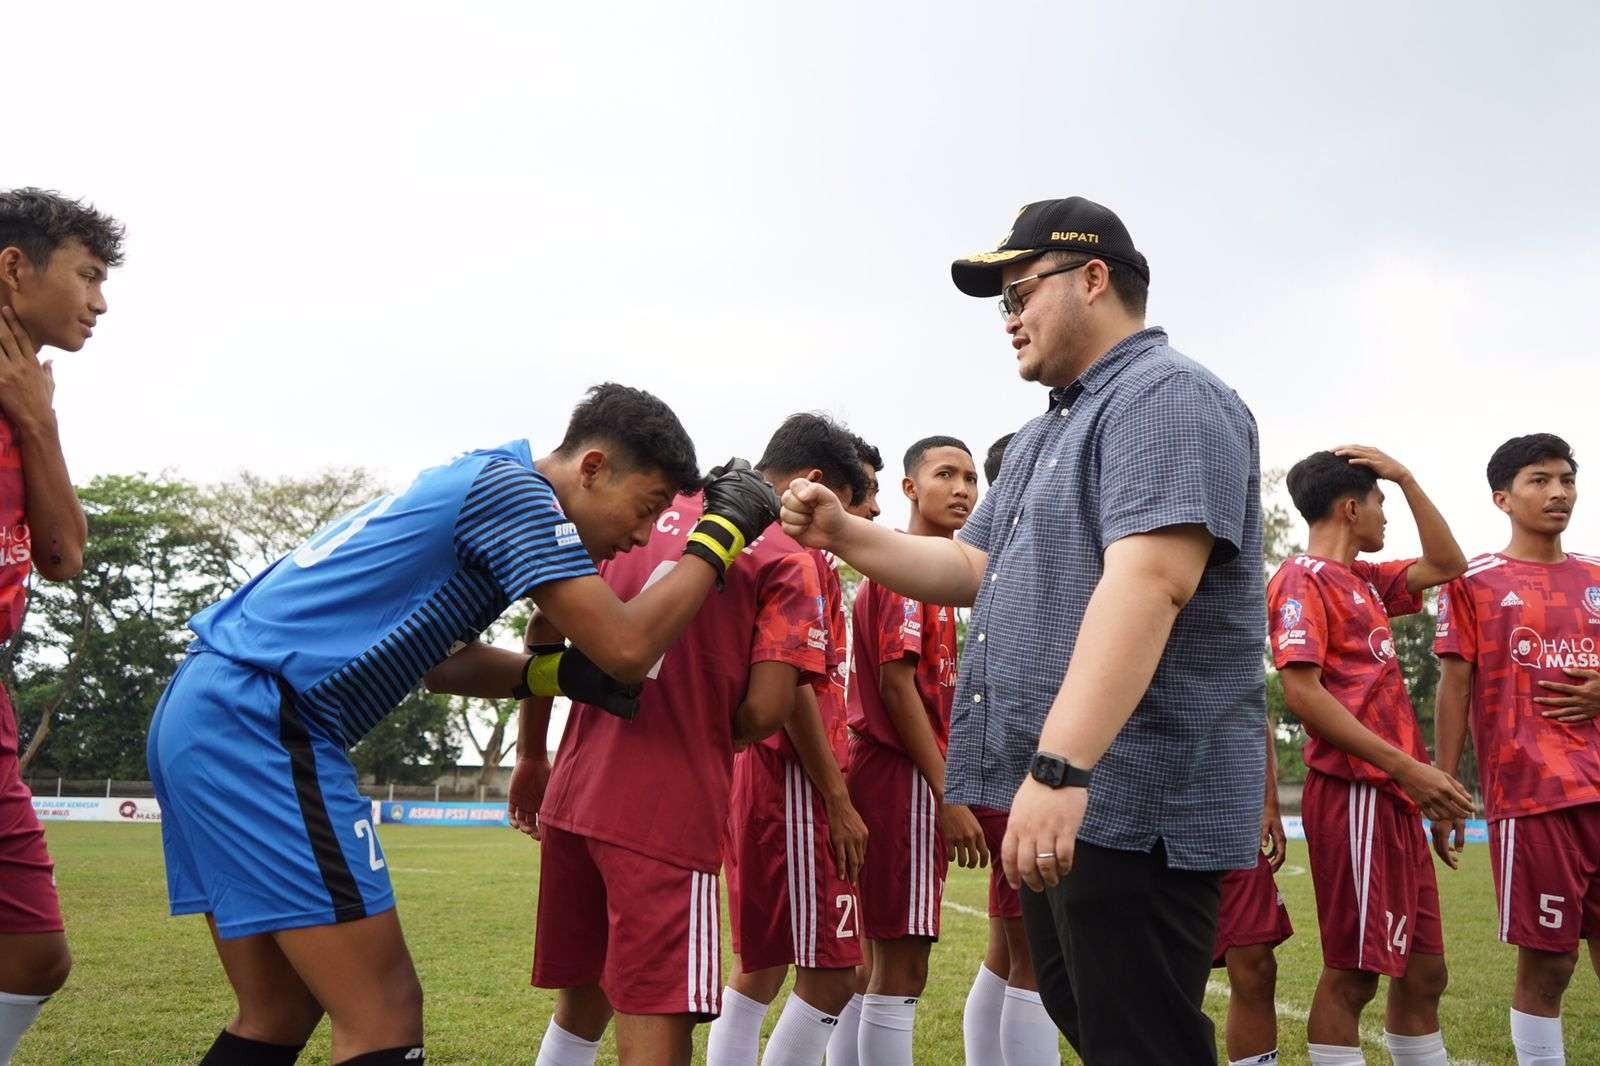 Pemkab Kediri akan menggelar kejuaraan sepak bola memperebutkan Piala Bupati Kediri Hanindhito Himawan Pramono. (Foto: Istimewa)